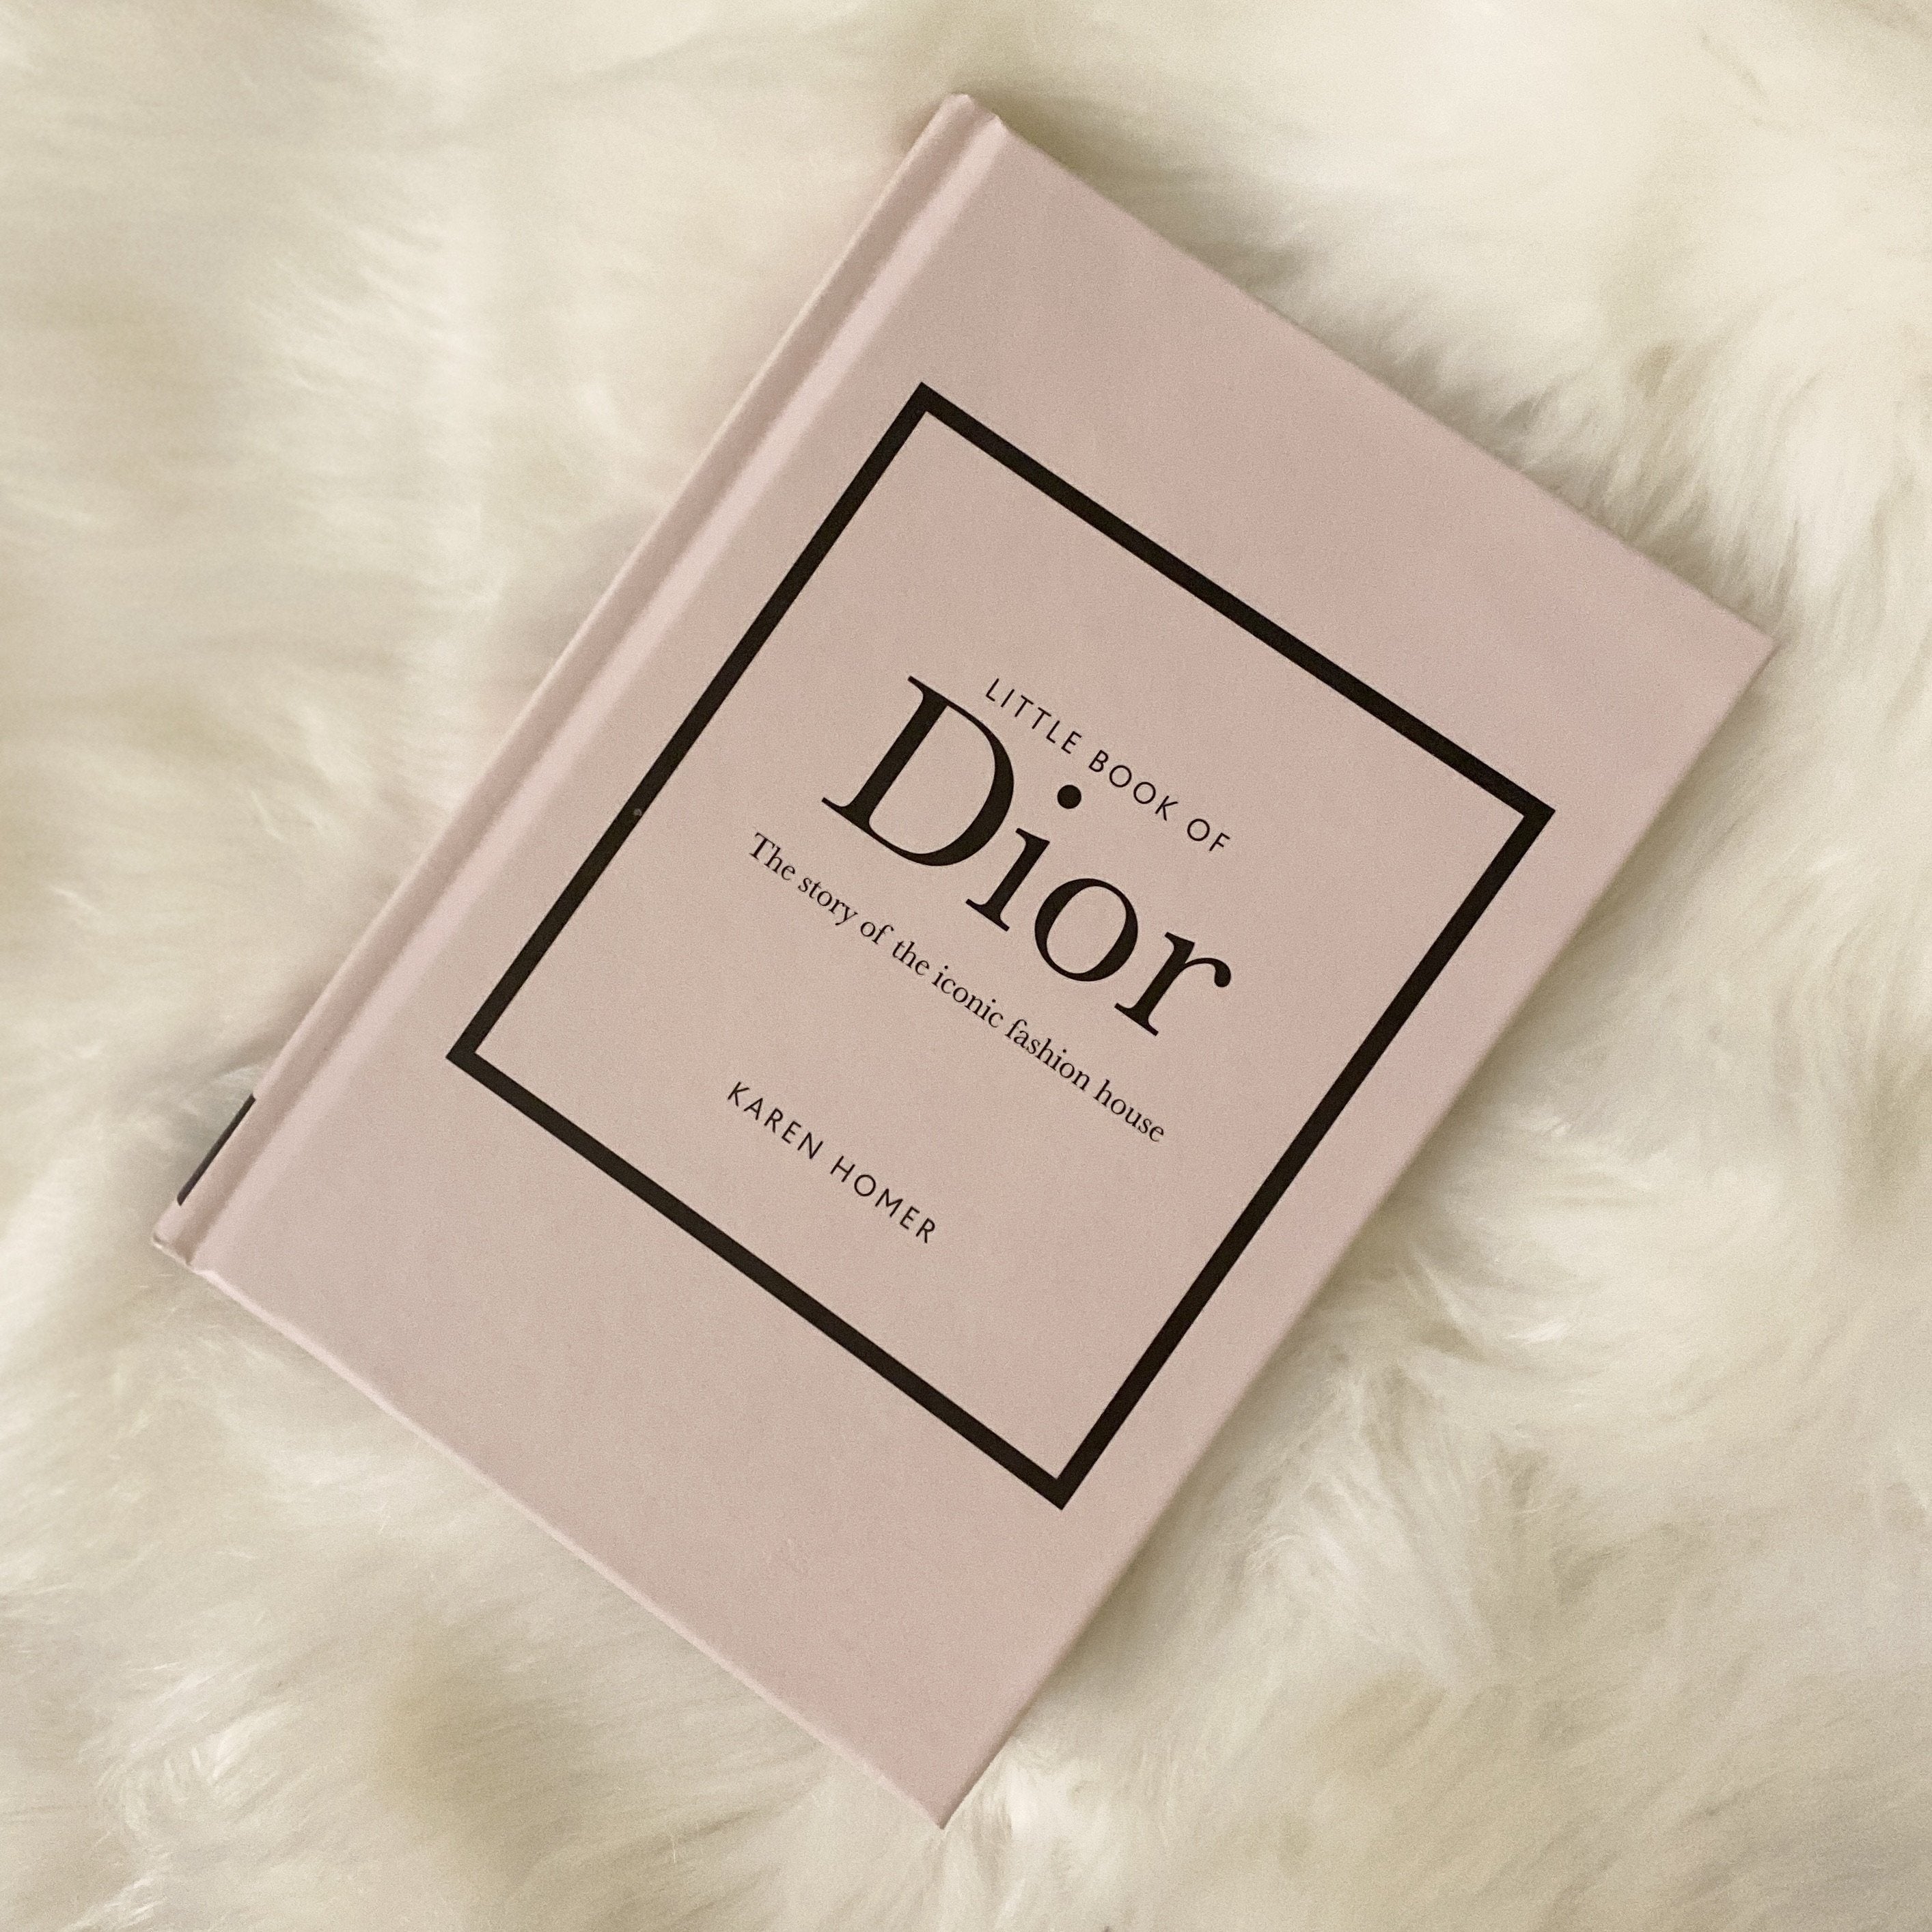 Little Book Chanel Prada Dior Gucci  idusemiduedutr